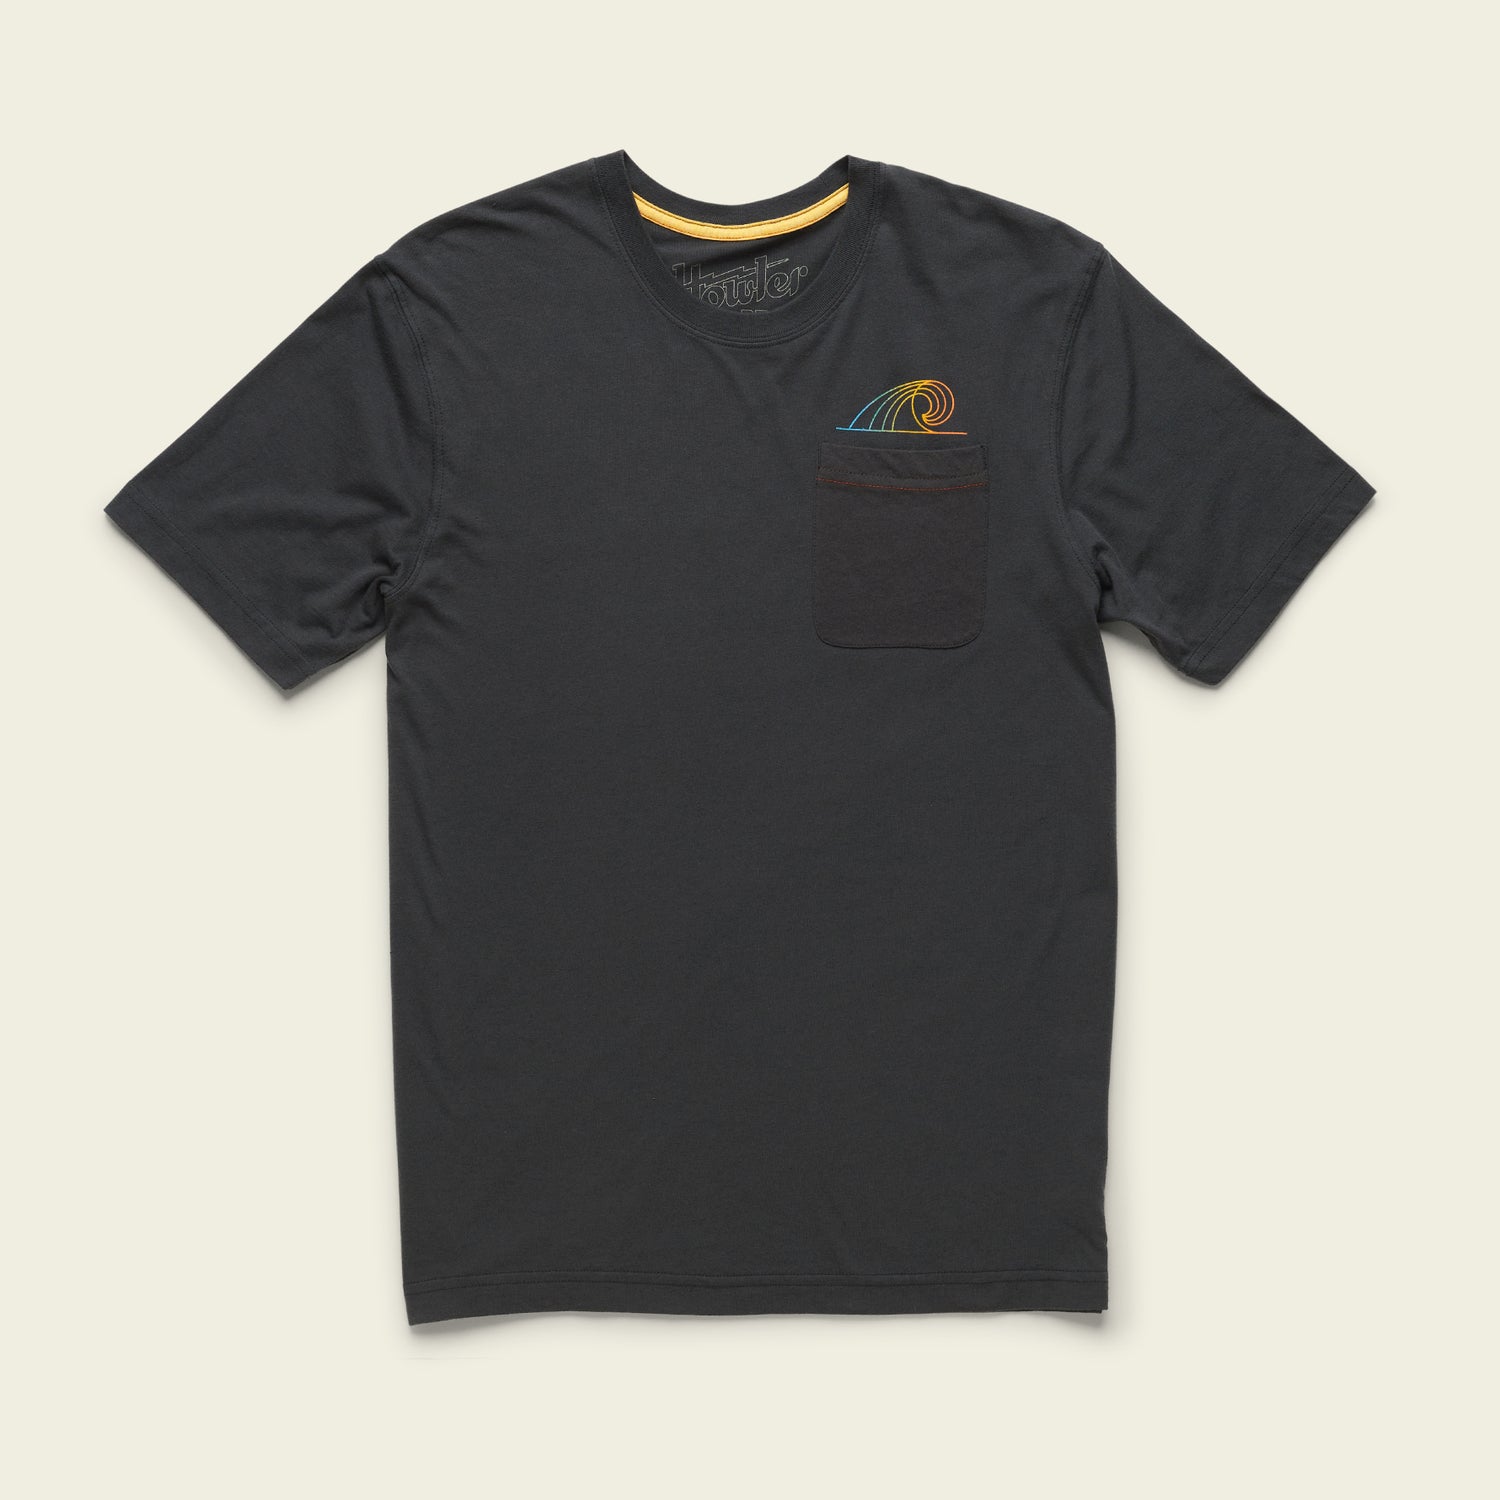 Shaper Series Chromatic Pocket T-Shirt